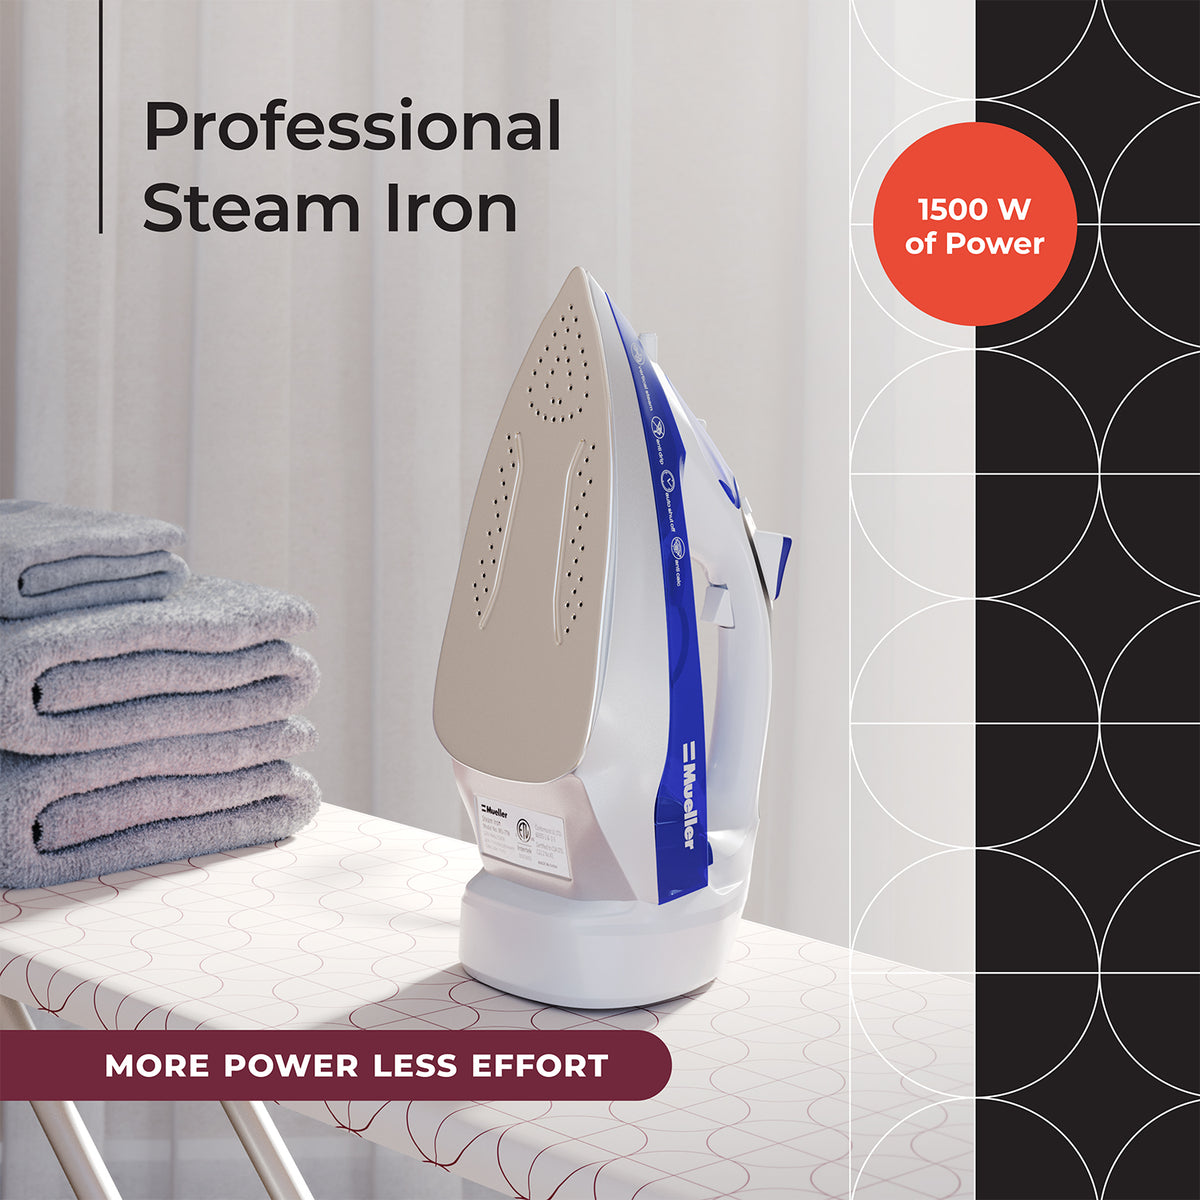 Professional Steam Iron